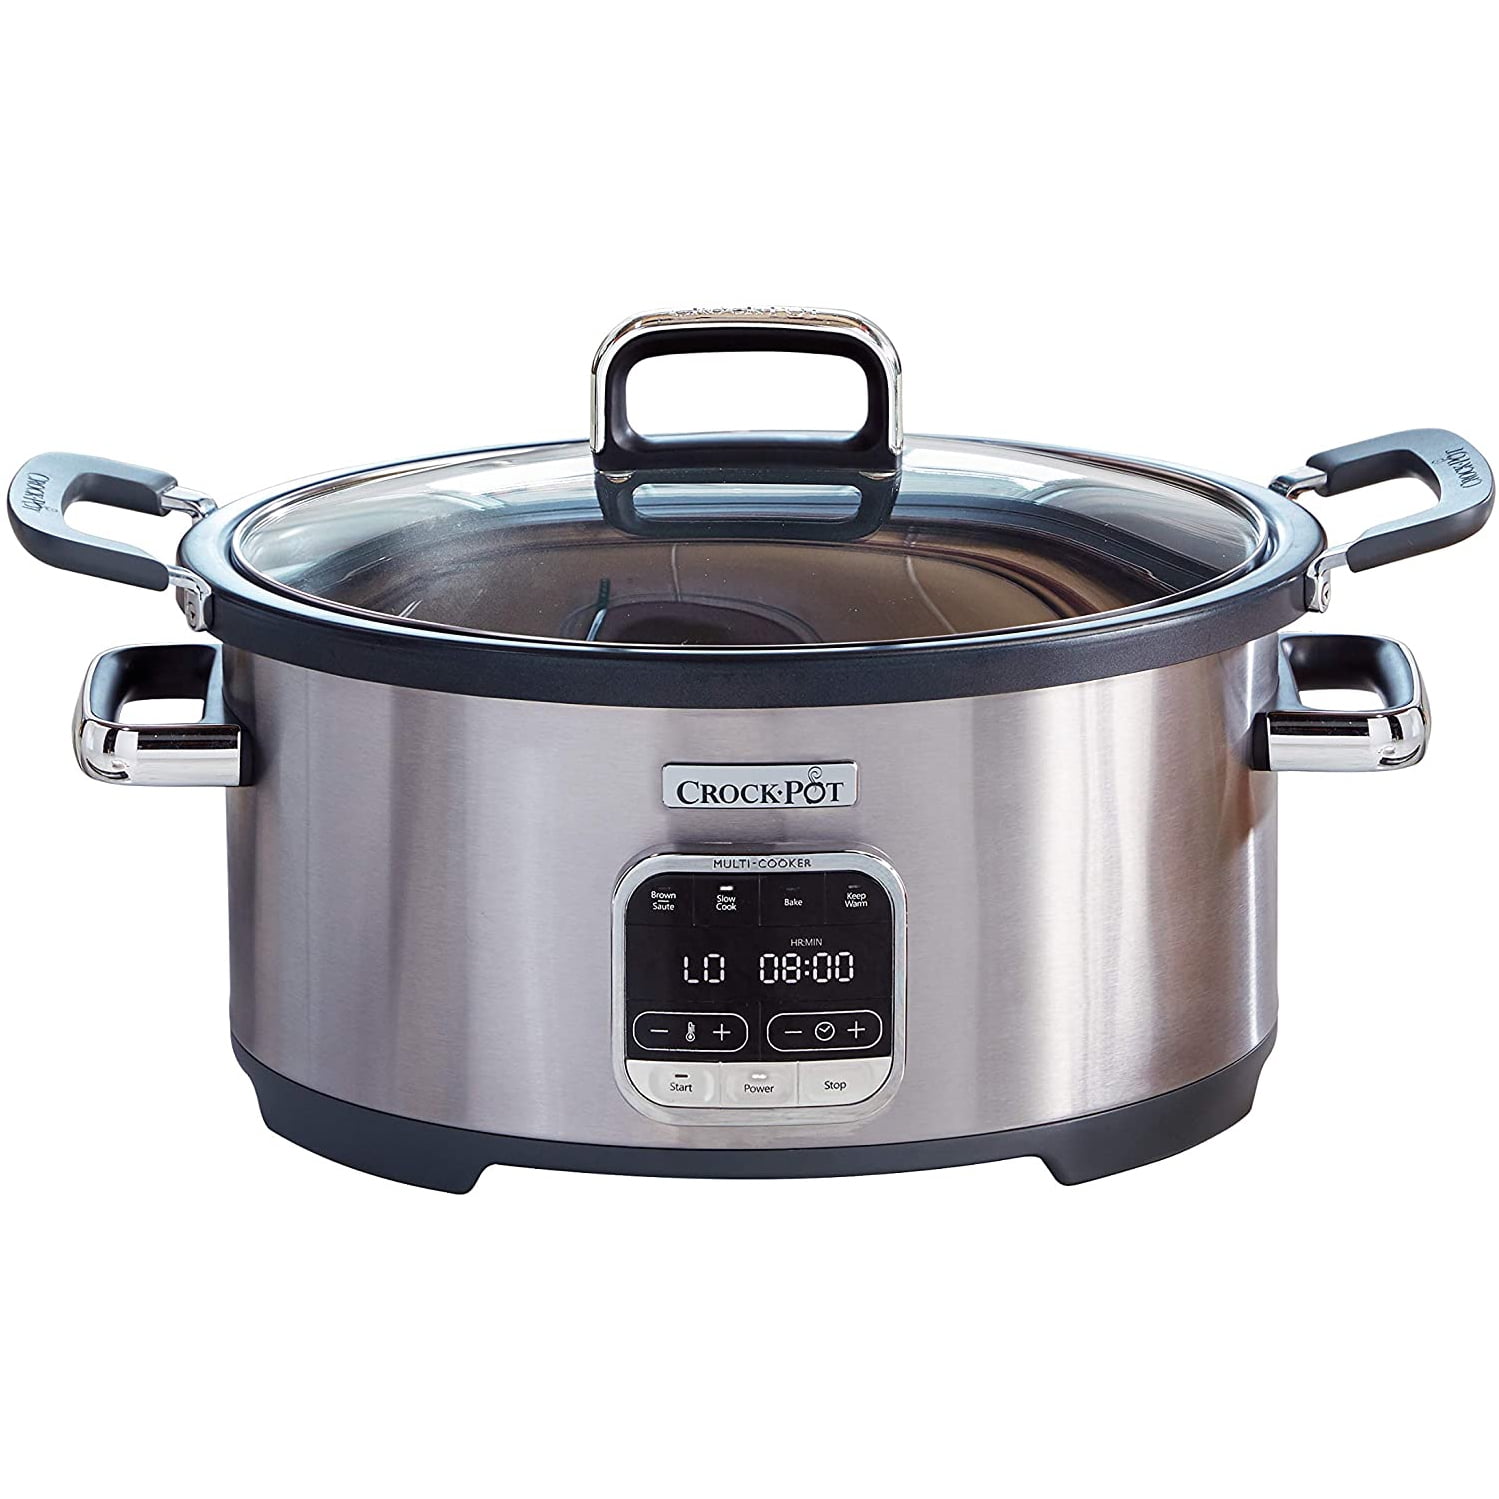 Crock-Pot Single Hand Cook & Carry 6-Quart Oval Slow Cooker, SCCPVZ600EC-S